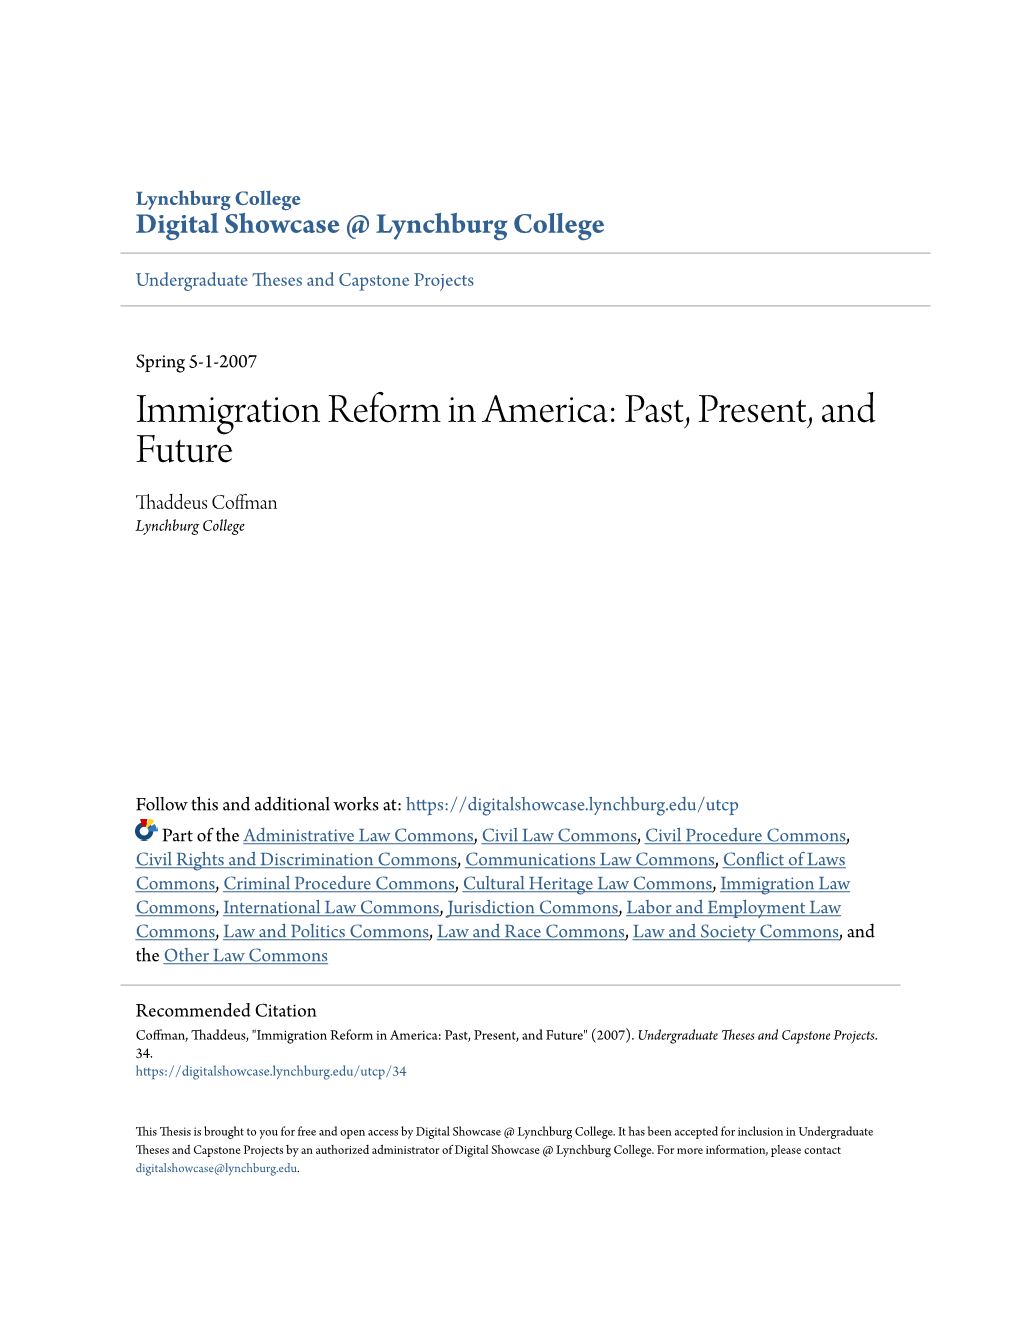 Immigration Reform in America: Past, Present, and Future Thaddeus Coffman Lynchburg College